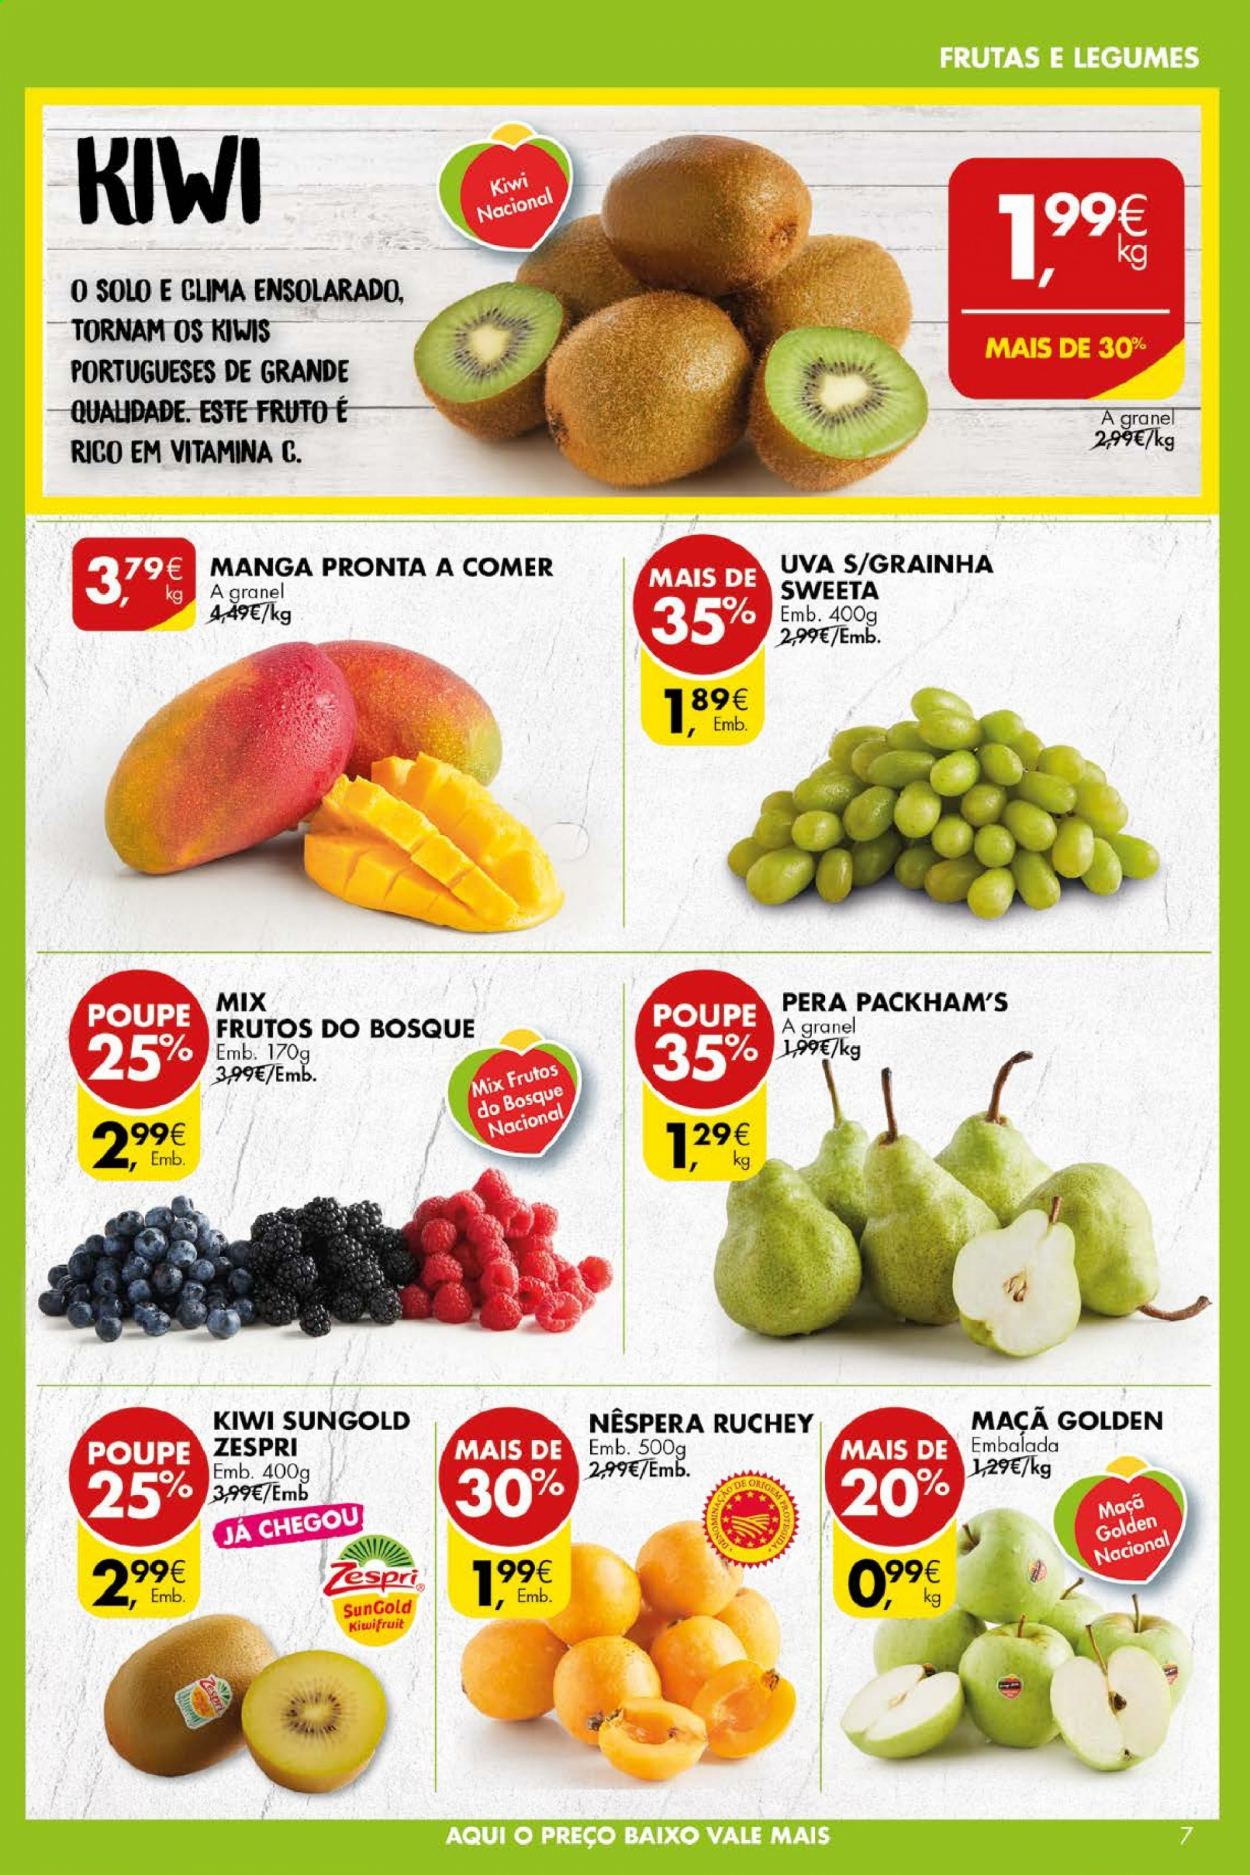 thumbnail - Folheto Pingo Doce - 11.5.2021 - 17.5.2021 - Produtos em promoção - maçã, pera, kiwi, uva, legumes, Vitamina C. Página 7.